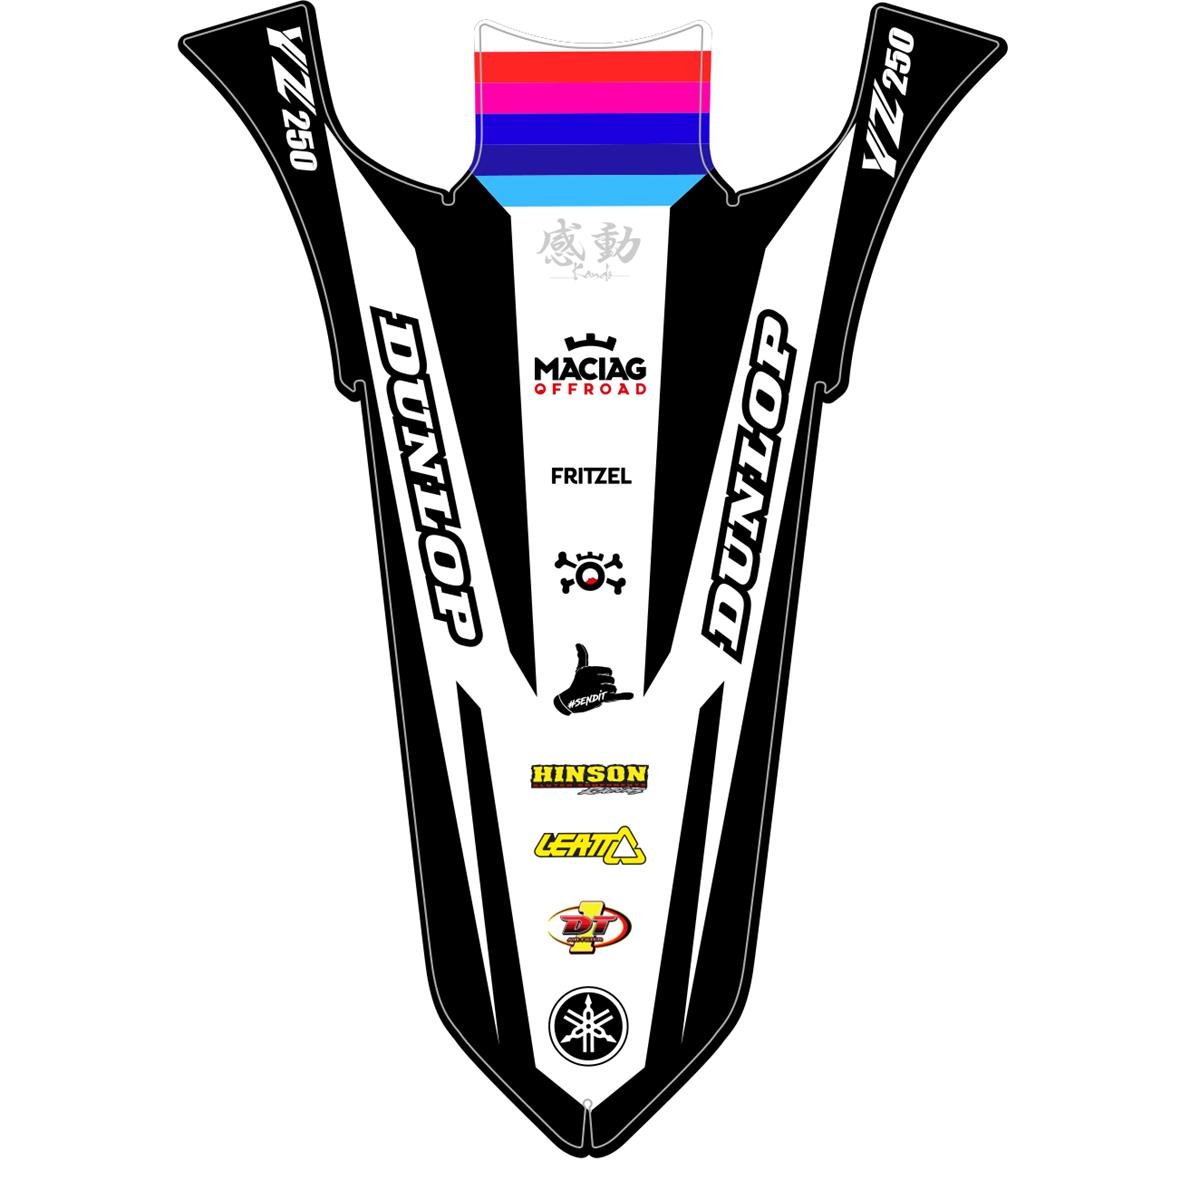 Maciag Offroad Dekor-Kit Race 9 Yamaha YZ 250 15-21